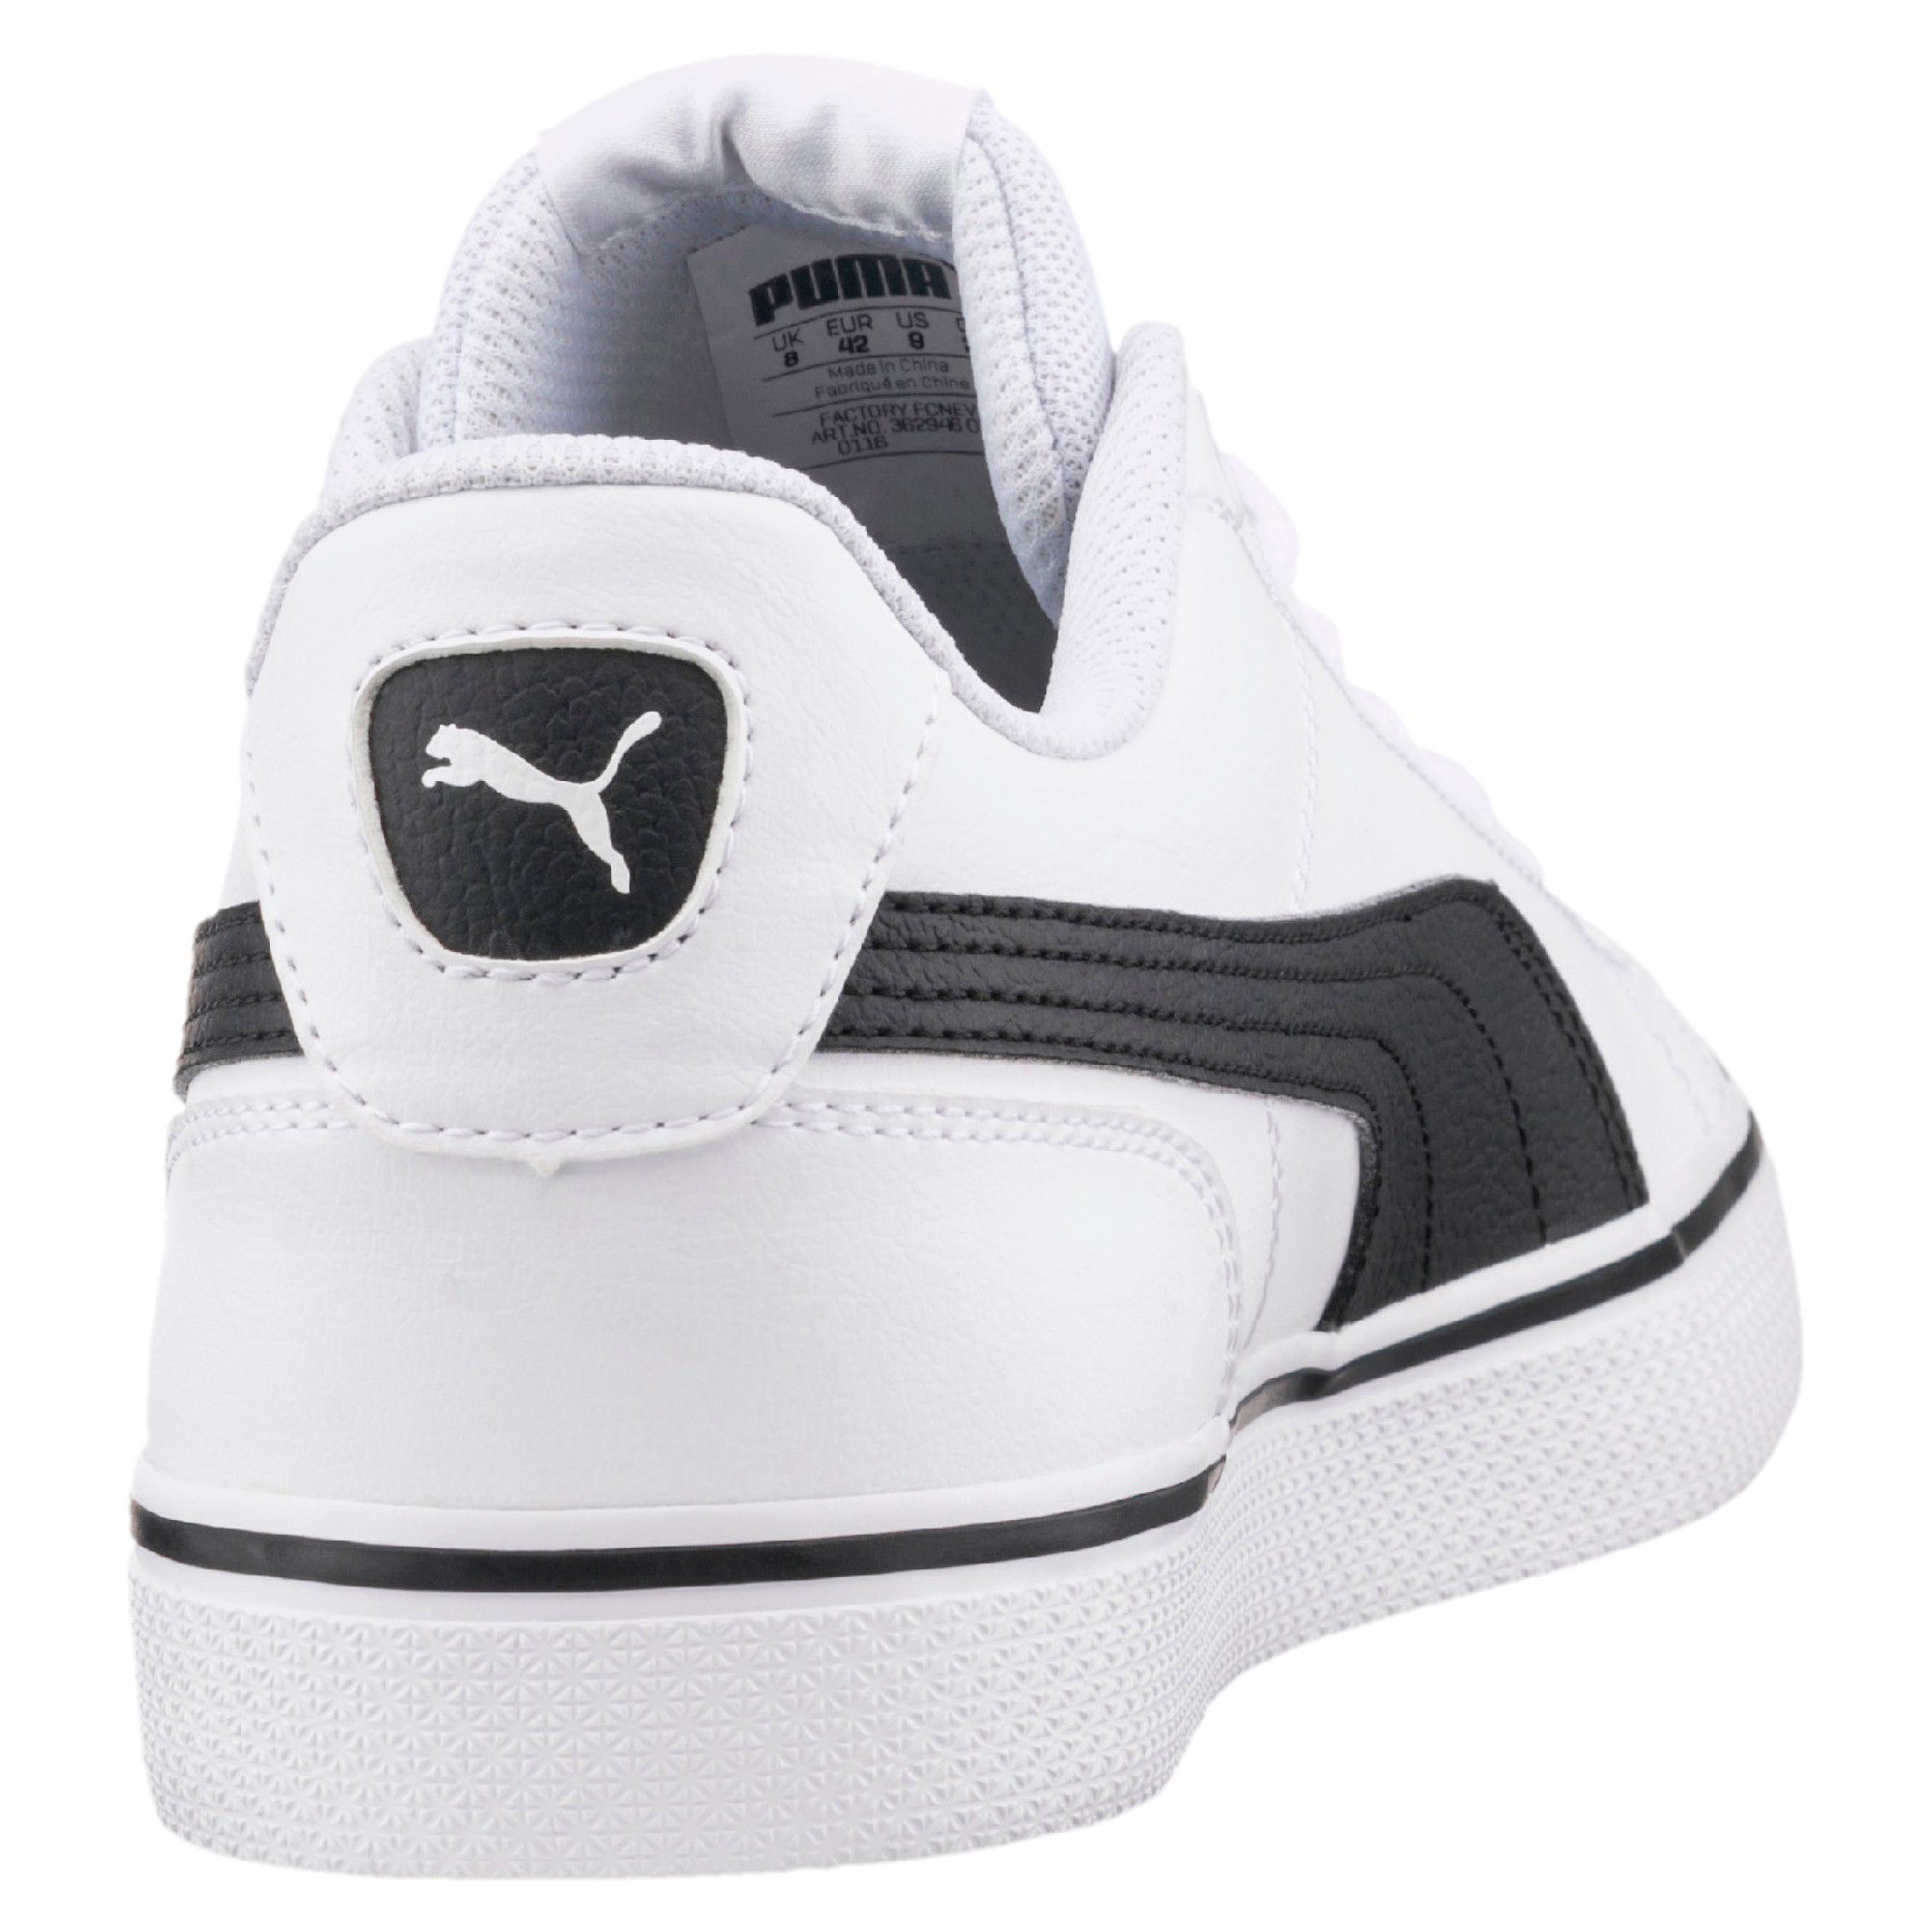 Buy Puma Unisex-Adult Smash Vulc Charcoal Gray-White Sneaker - 12 UK  (35962220) at Amazon.in